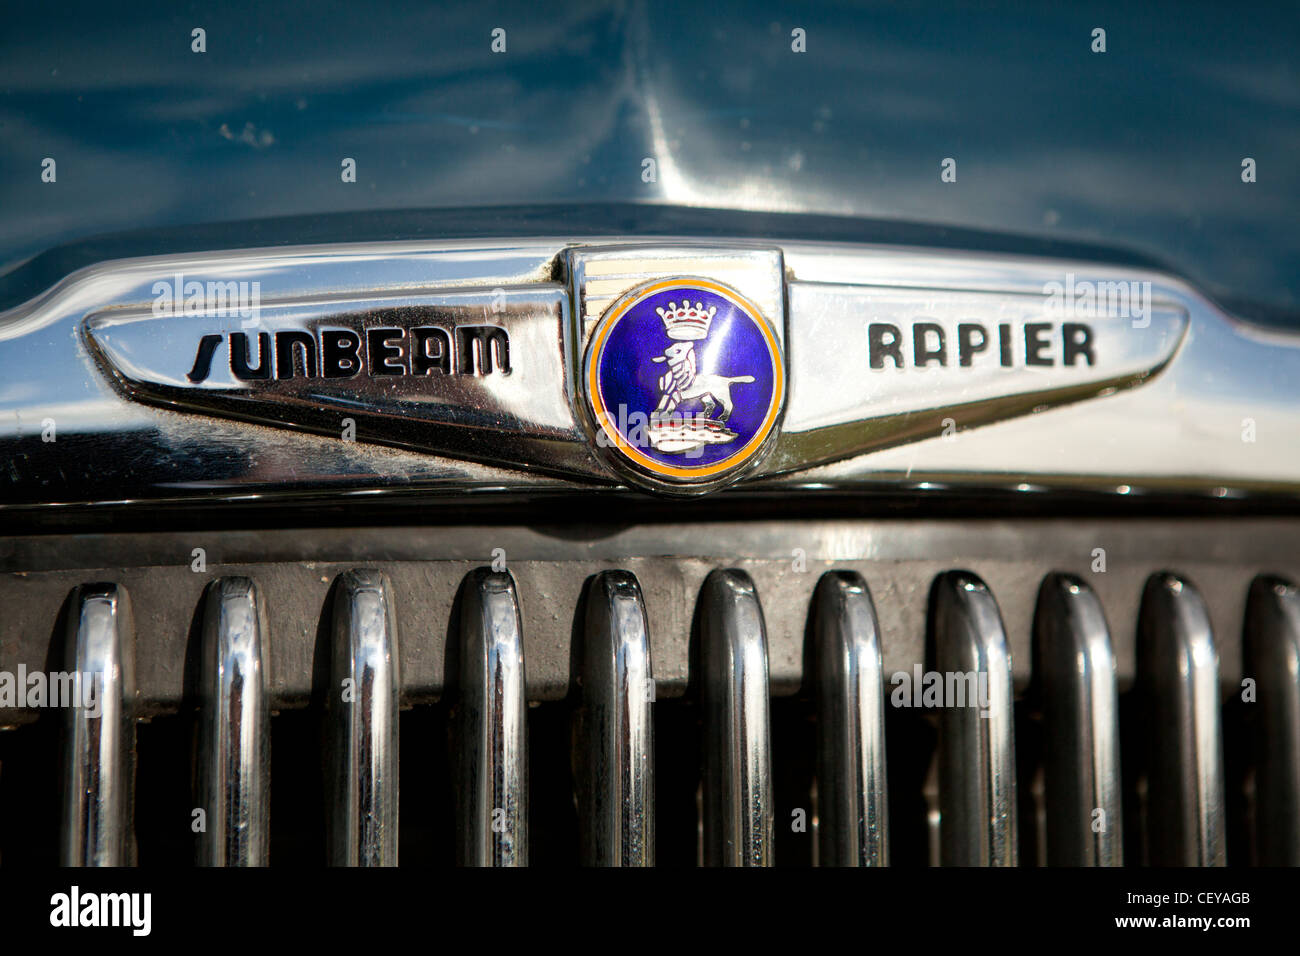 A close up view of a classic Sunbeam Rapier car at Goodwood revival Stock Photo